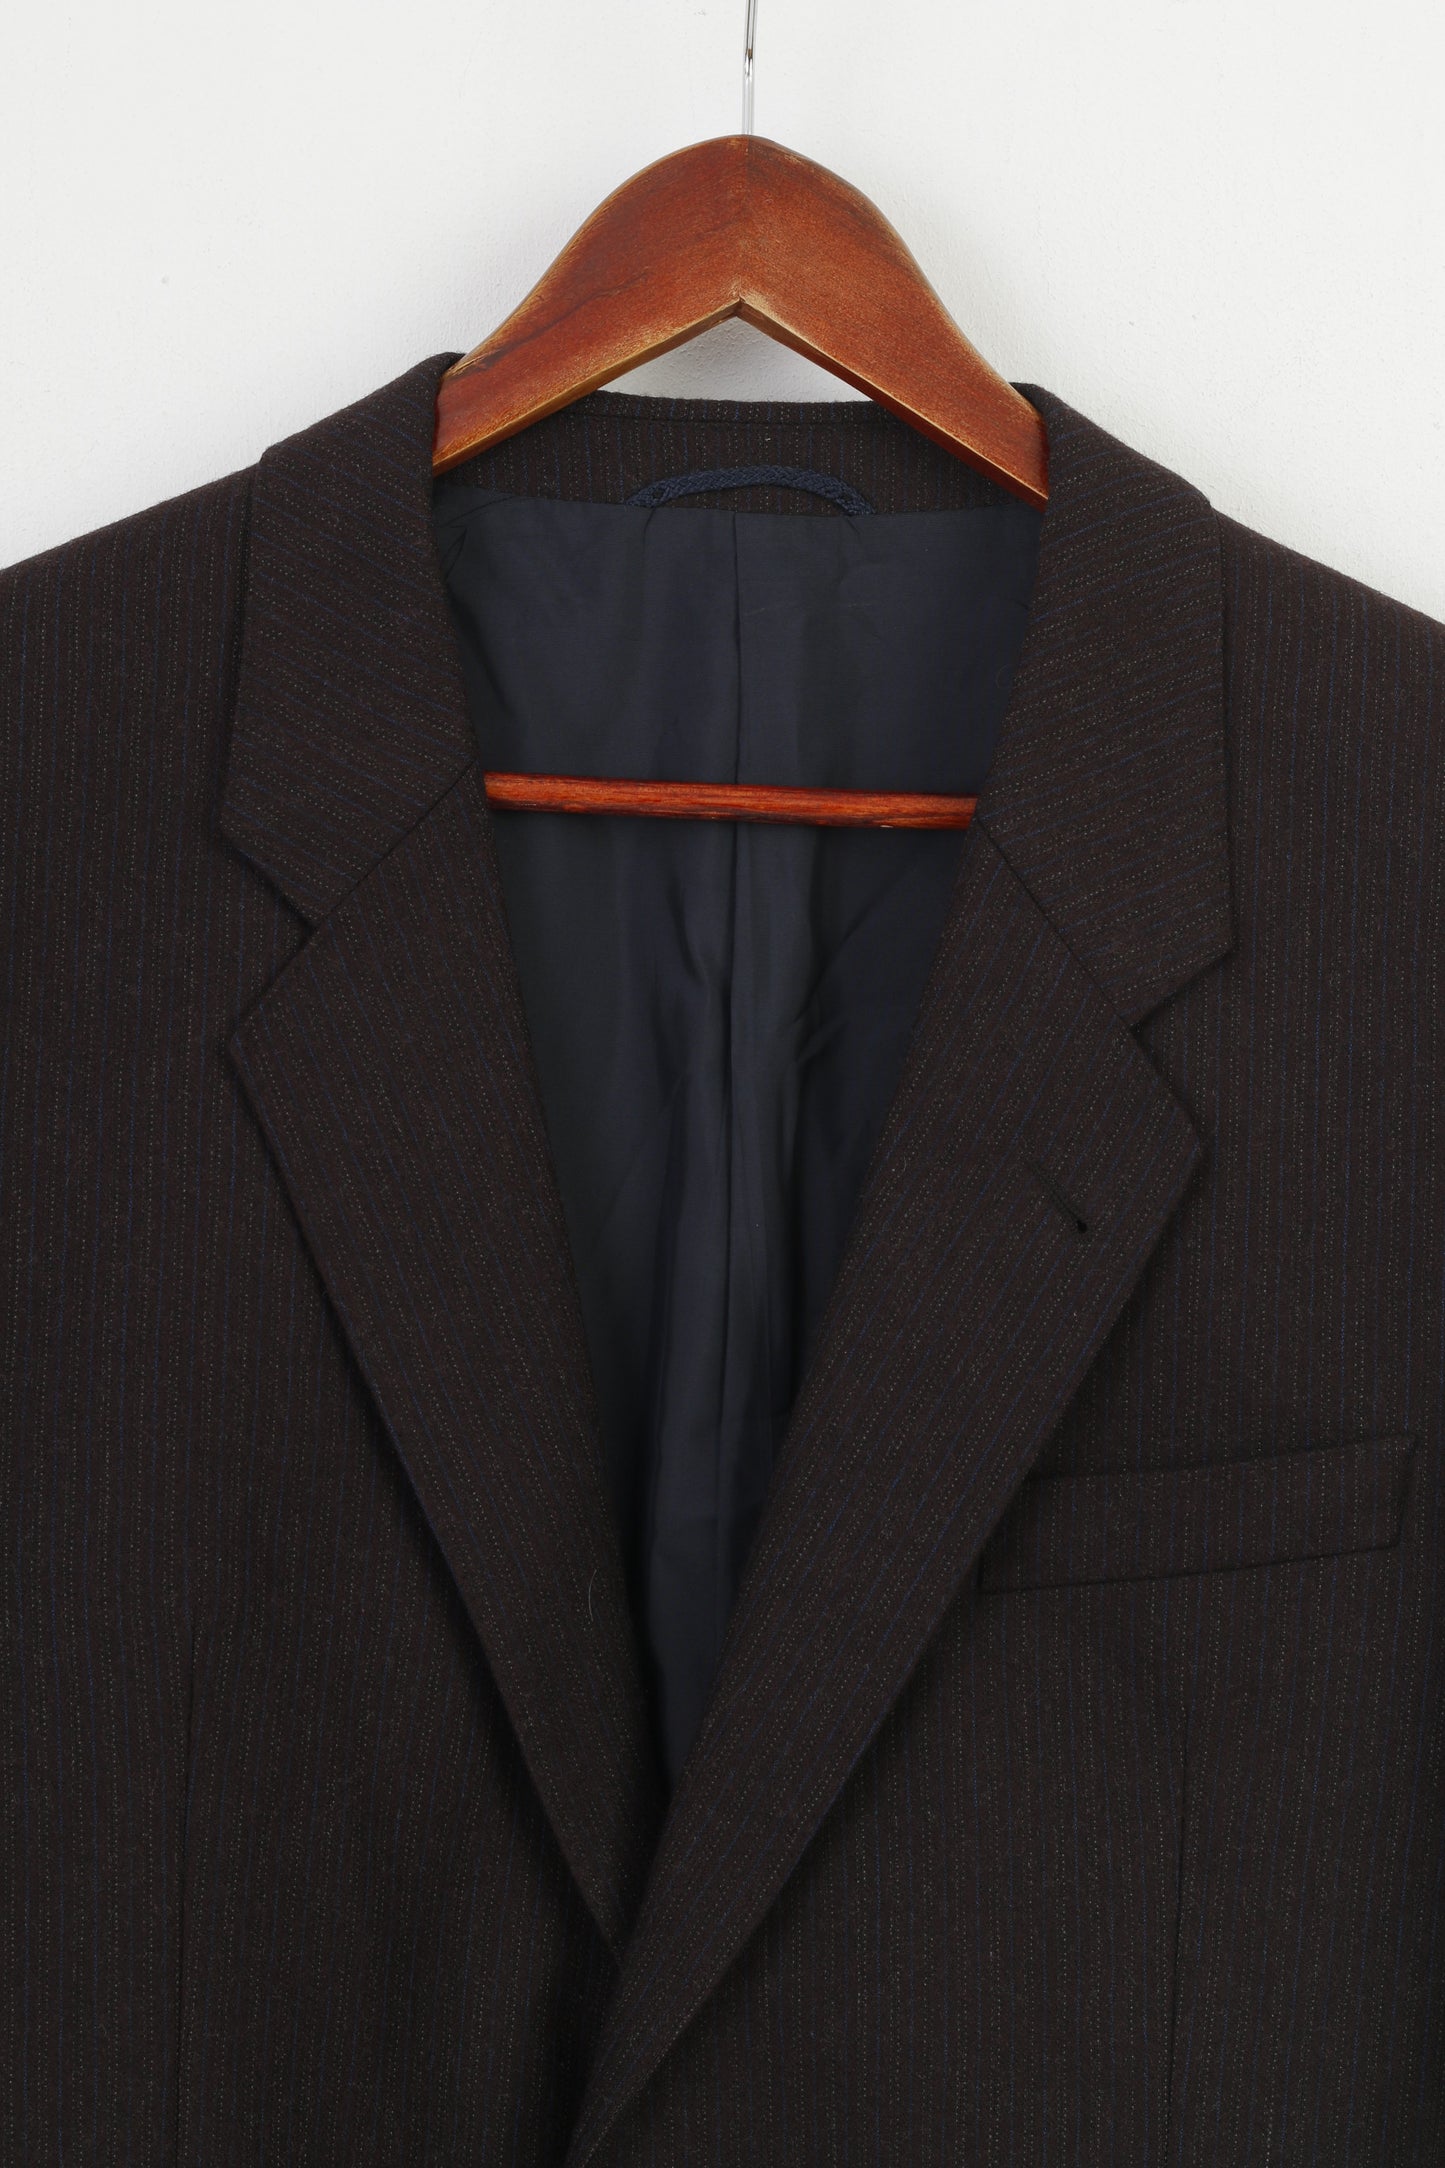 Greitt Jeunesse Men 44 54 Blazer Vintage Wool Dark Brown Striped Single Breasted Top